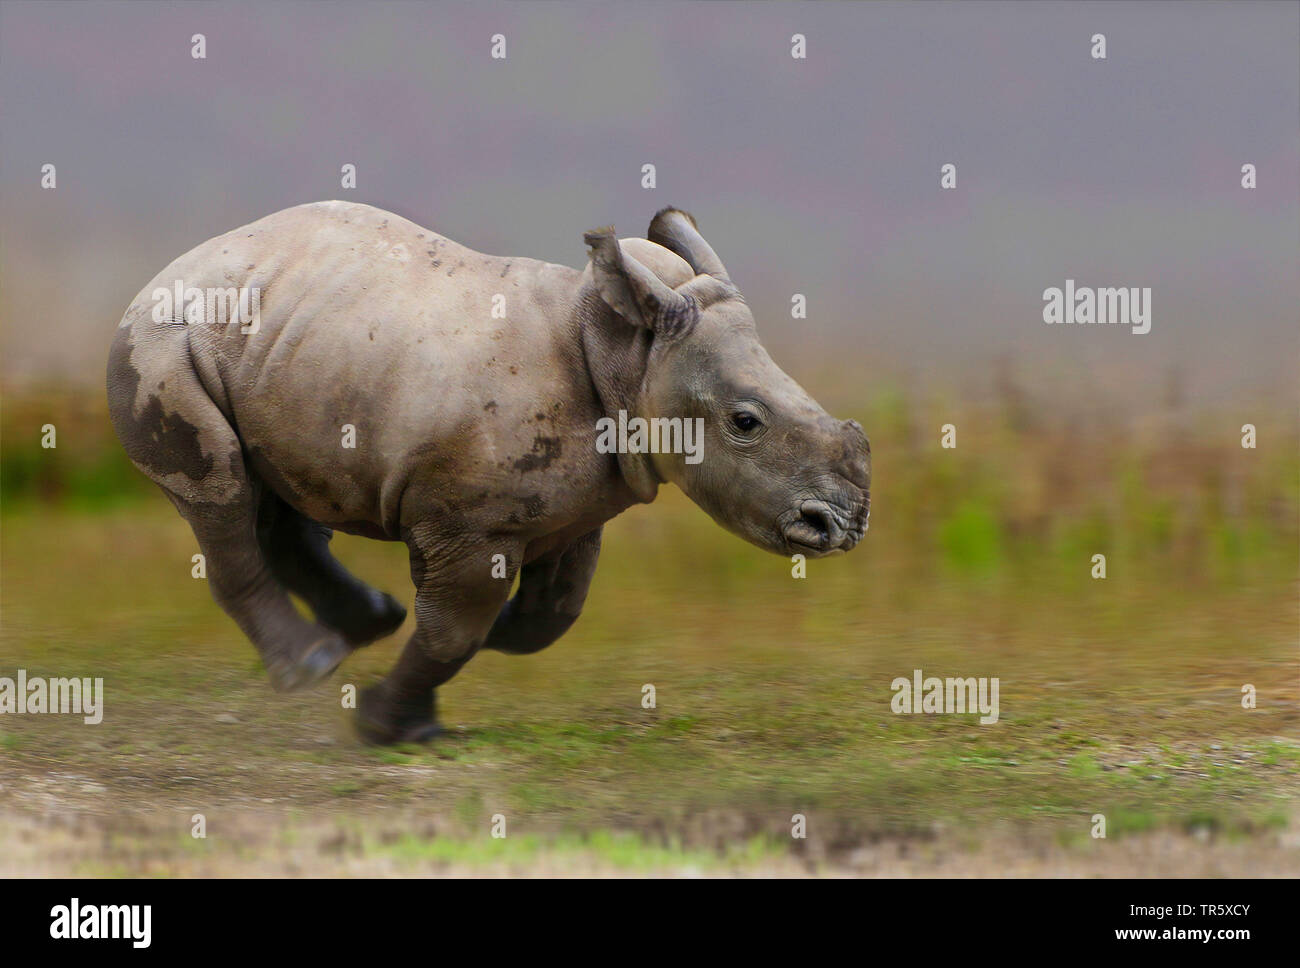 running baby rhinoceros, side view Stock Photo